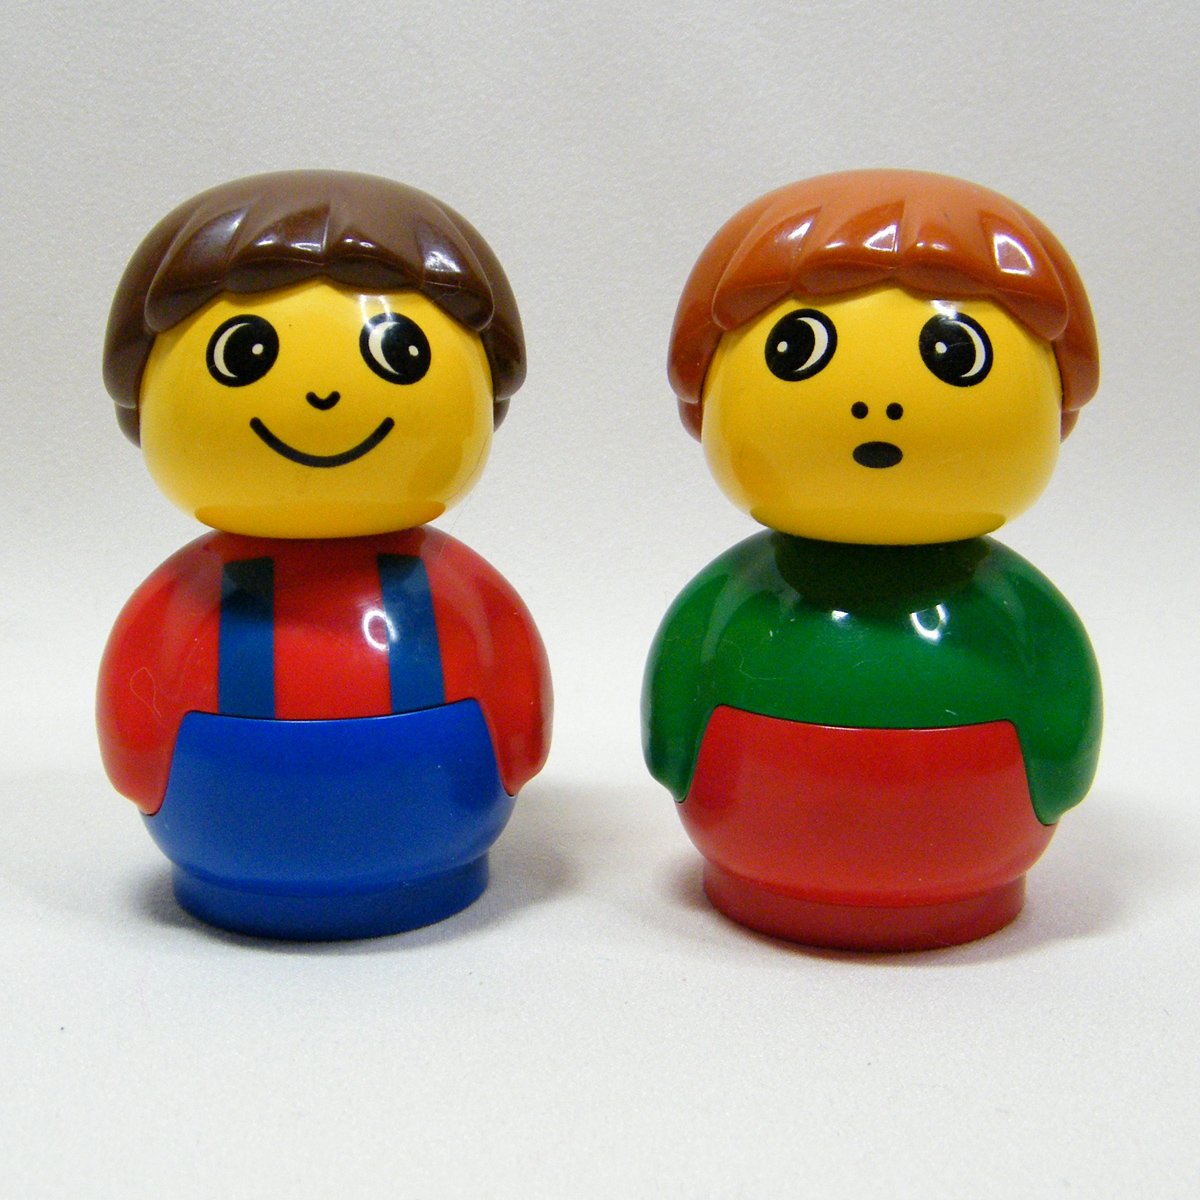 Lego Duplo PRIMO Mini Pair of Figures, Blue Body & Suspenders, Green Shirt